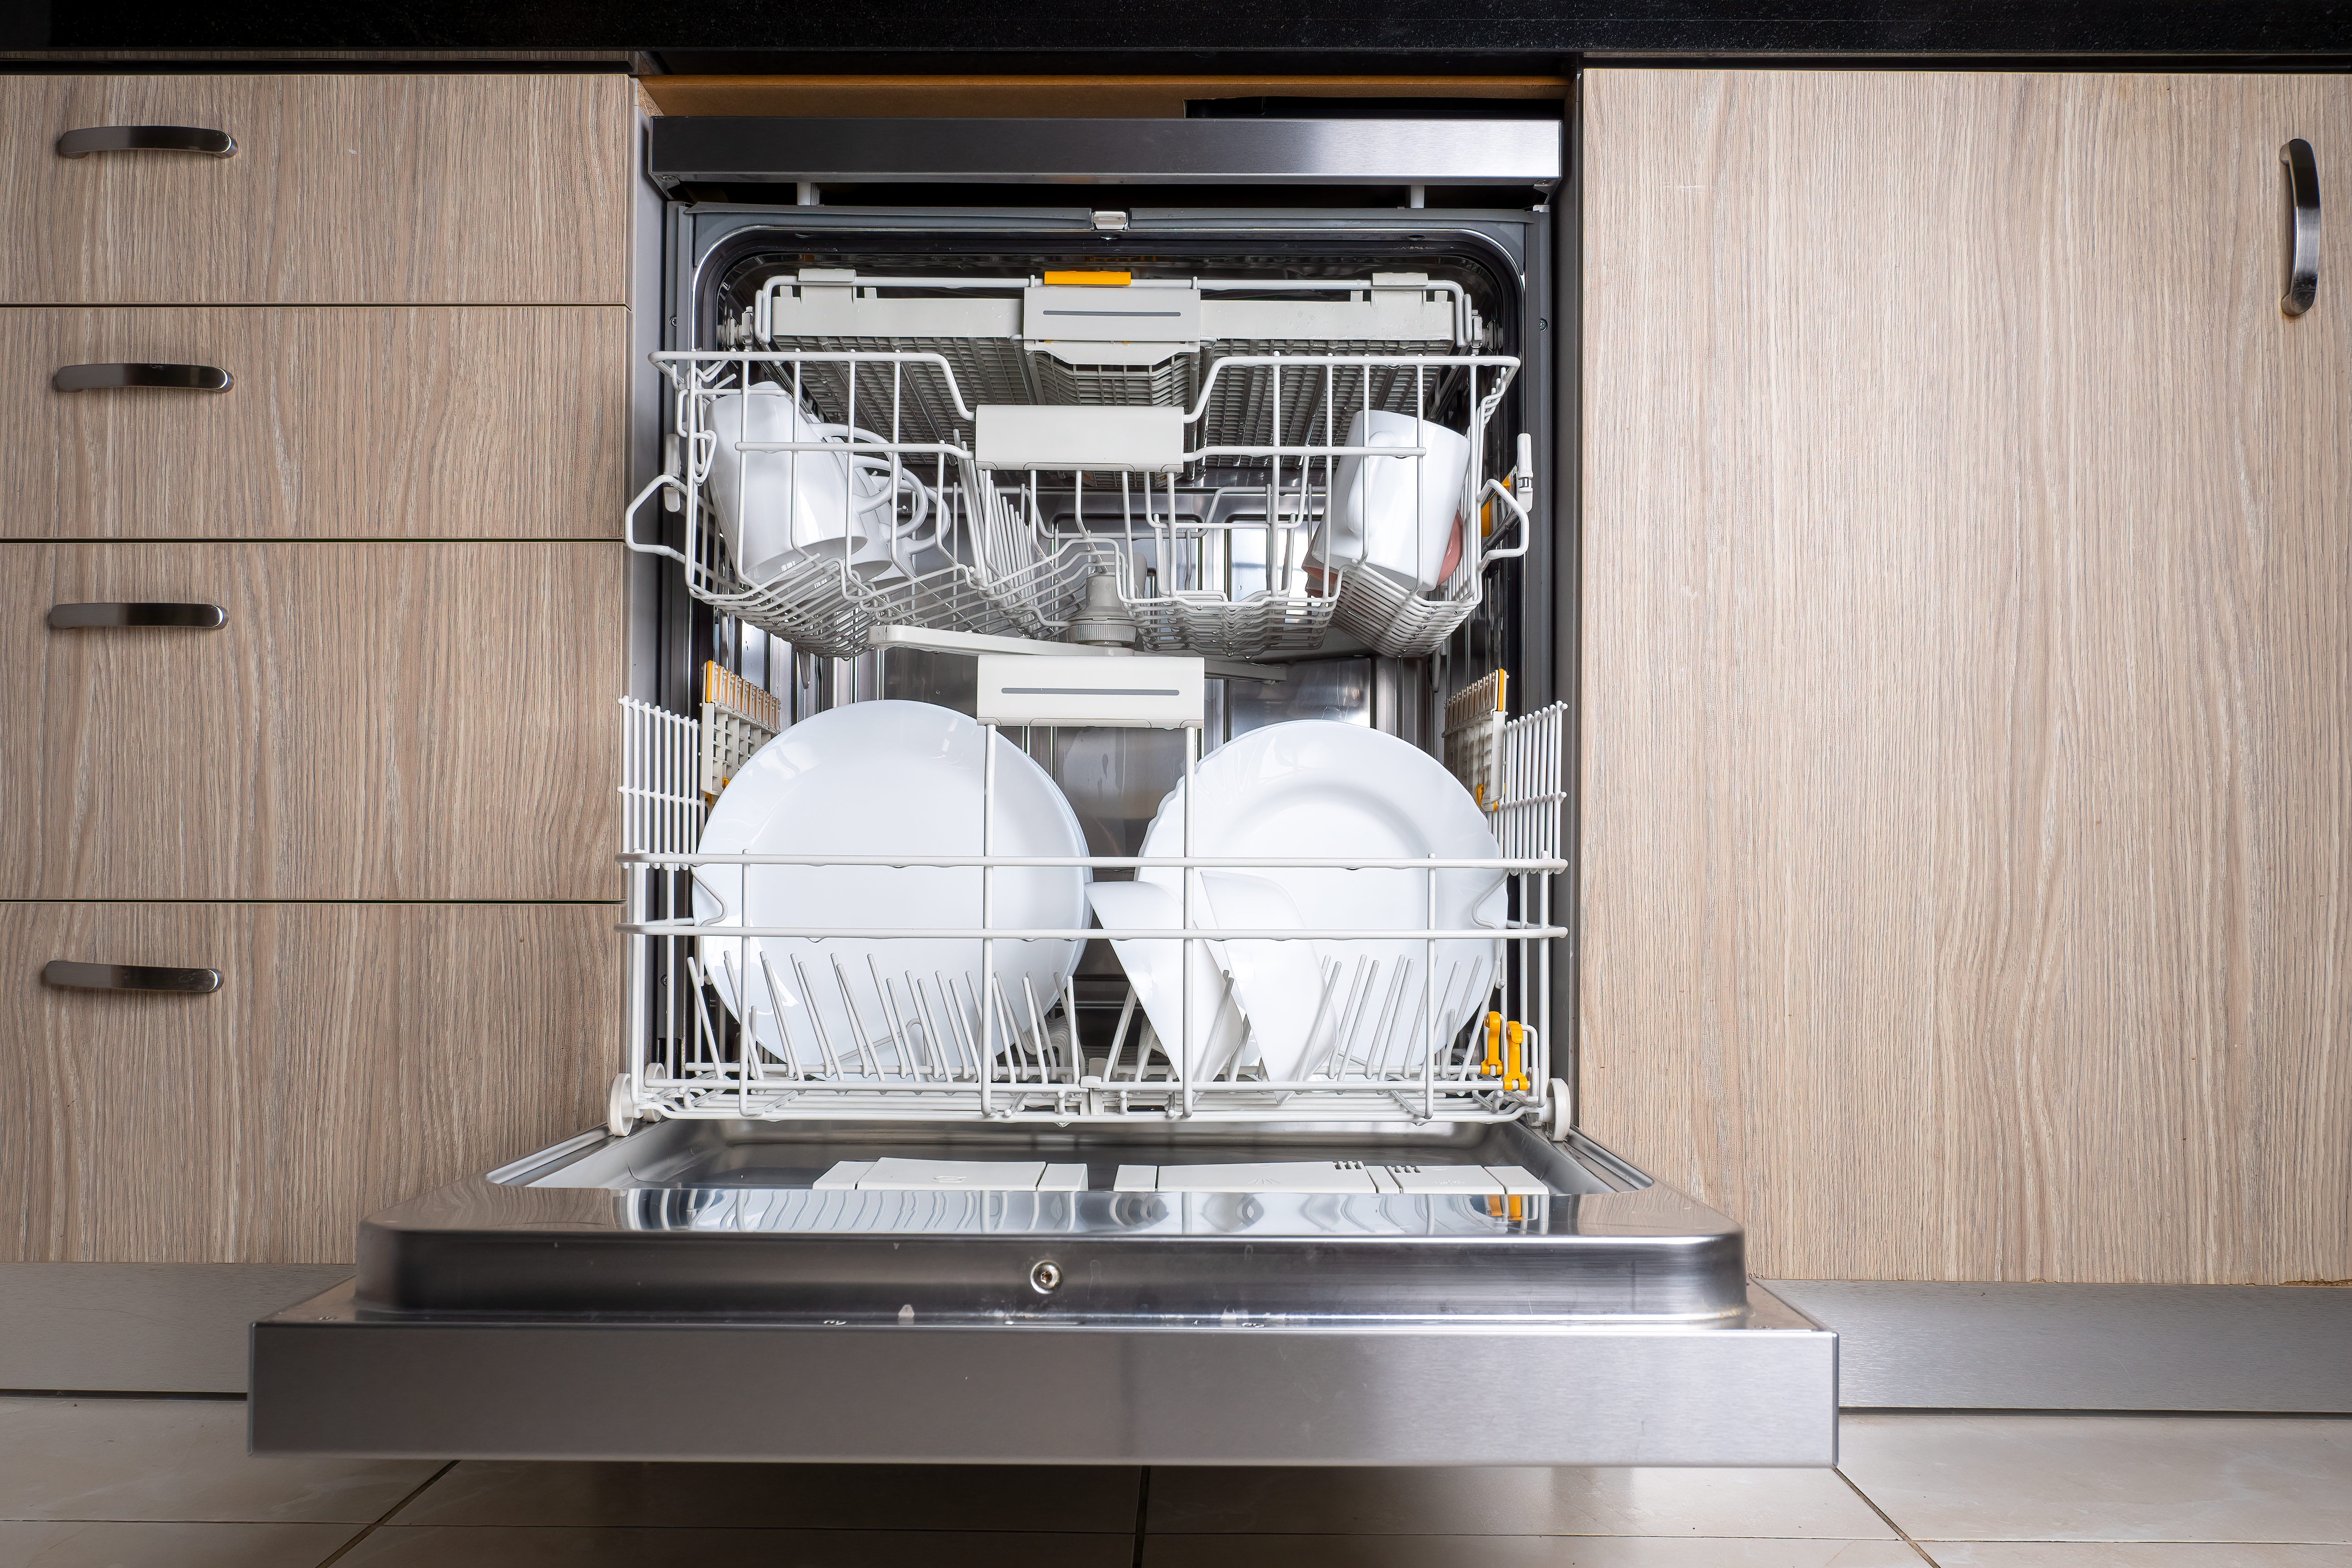 Inside of Dishwasher